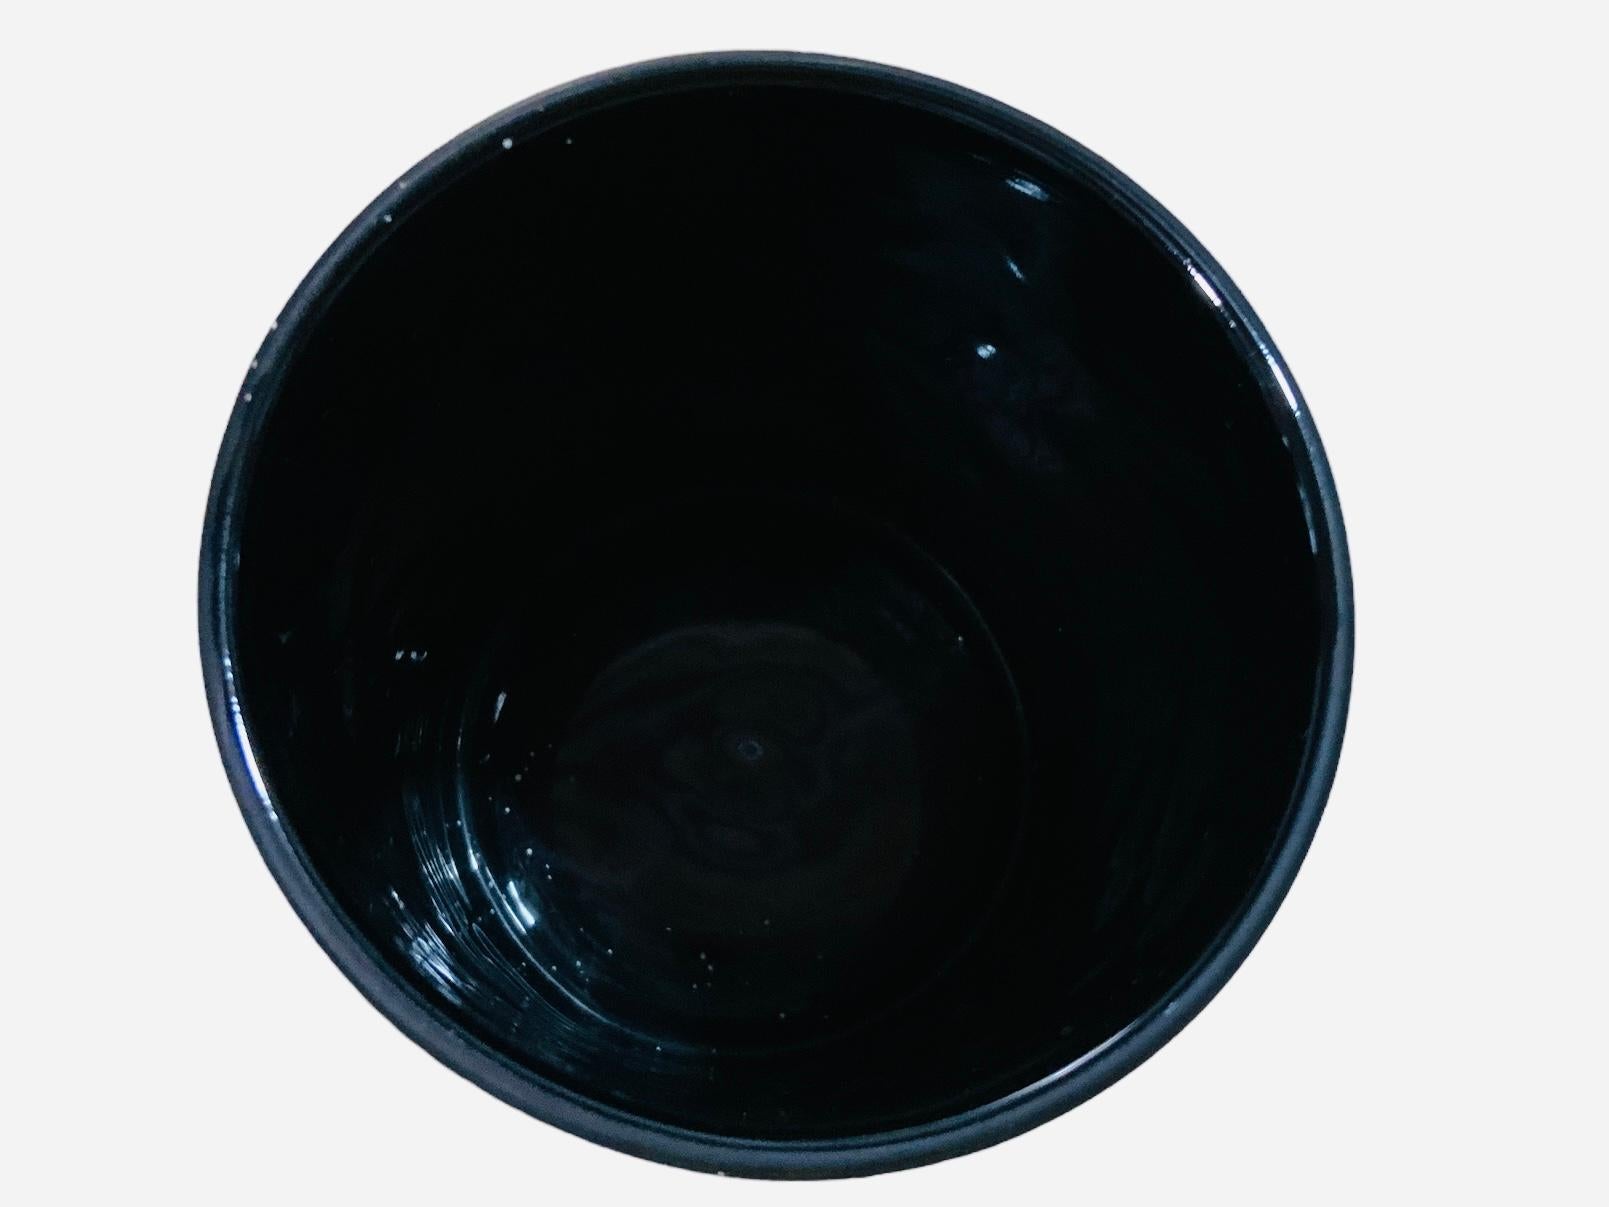 Embossed Rosenthal Studio Bjorn Winblad Black Porcelain Small Vase For Sale